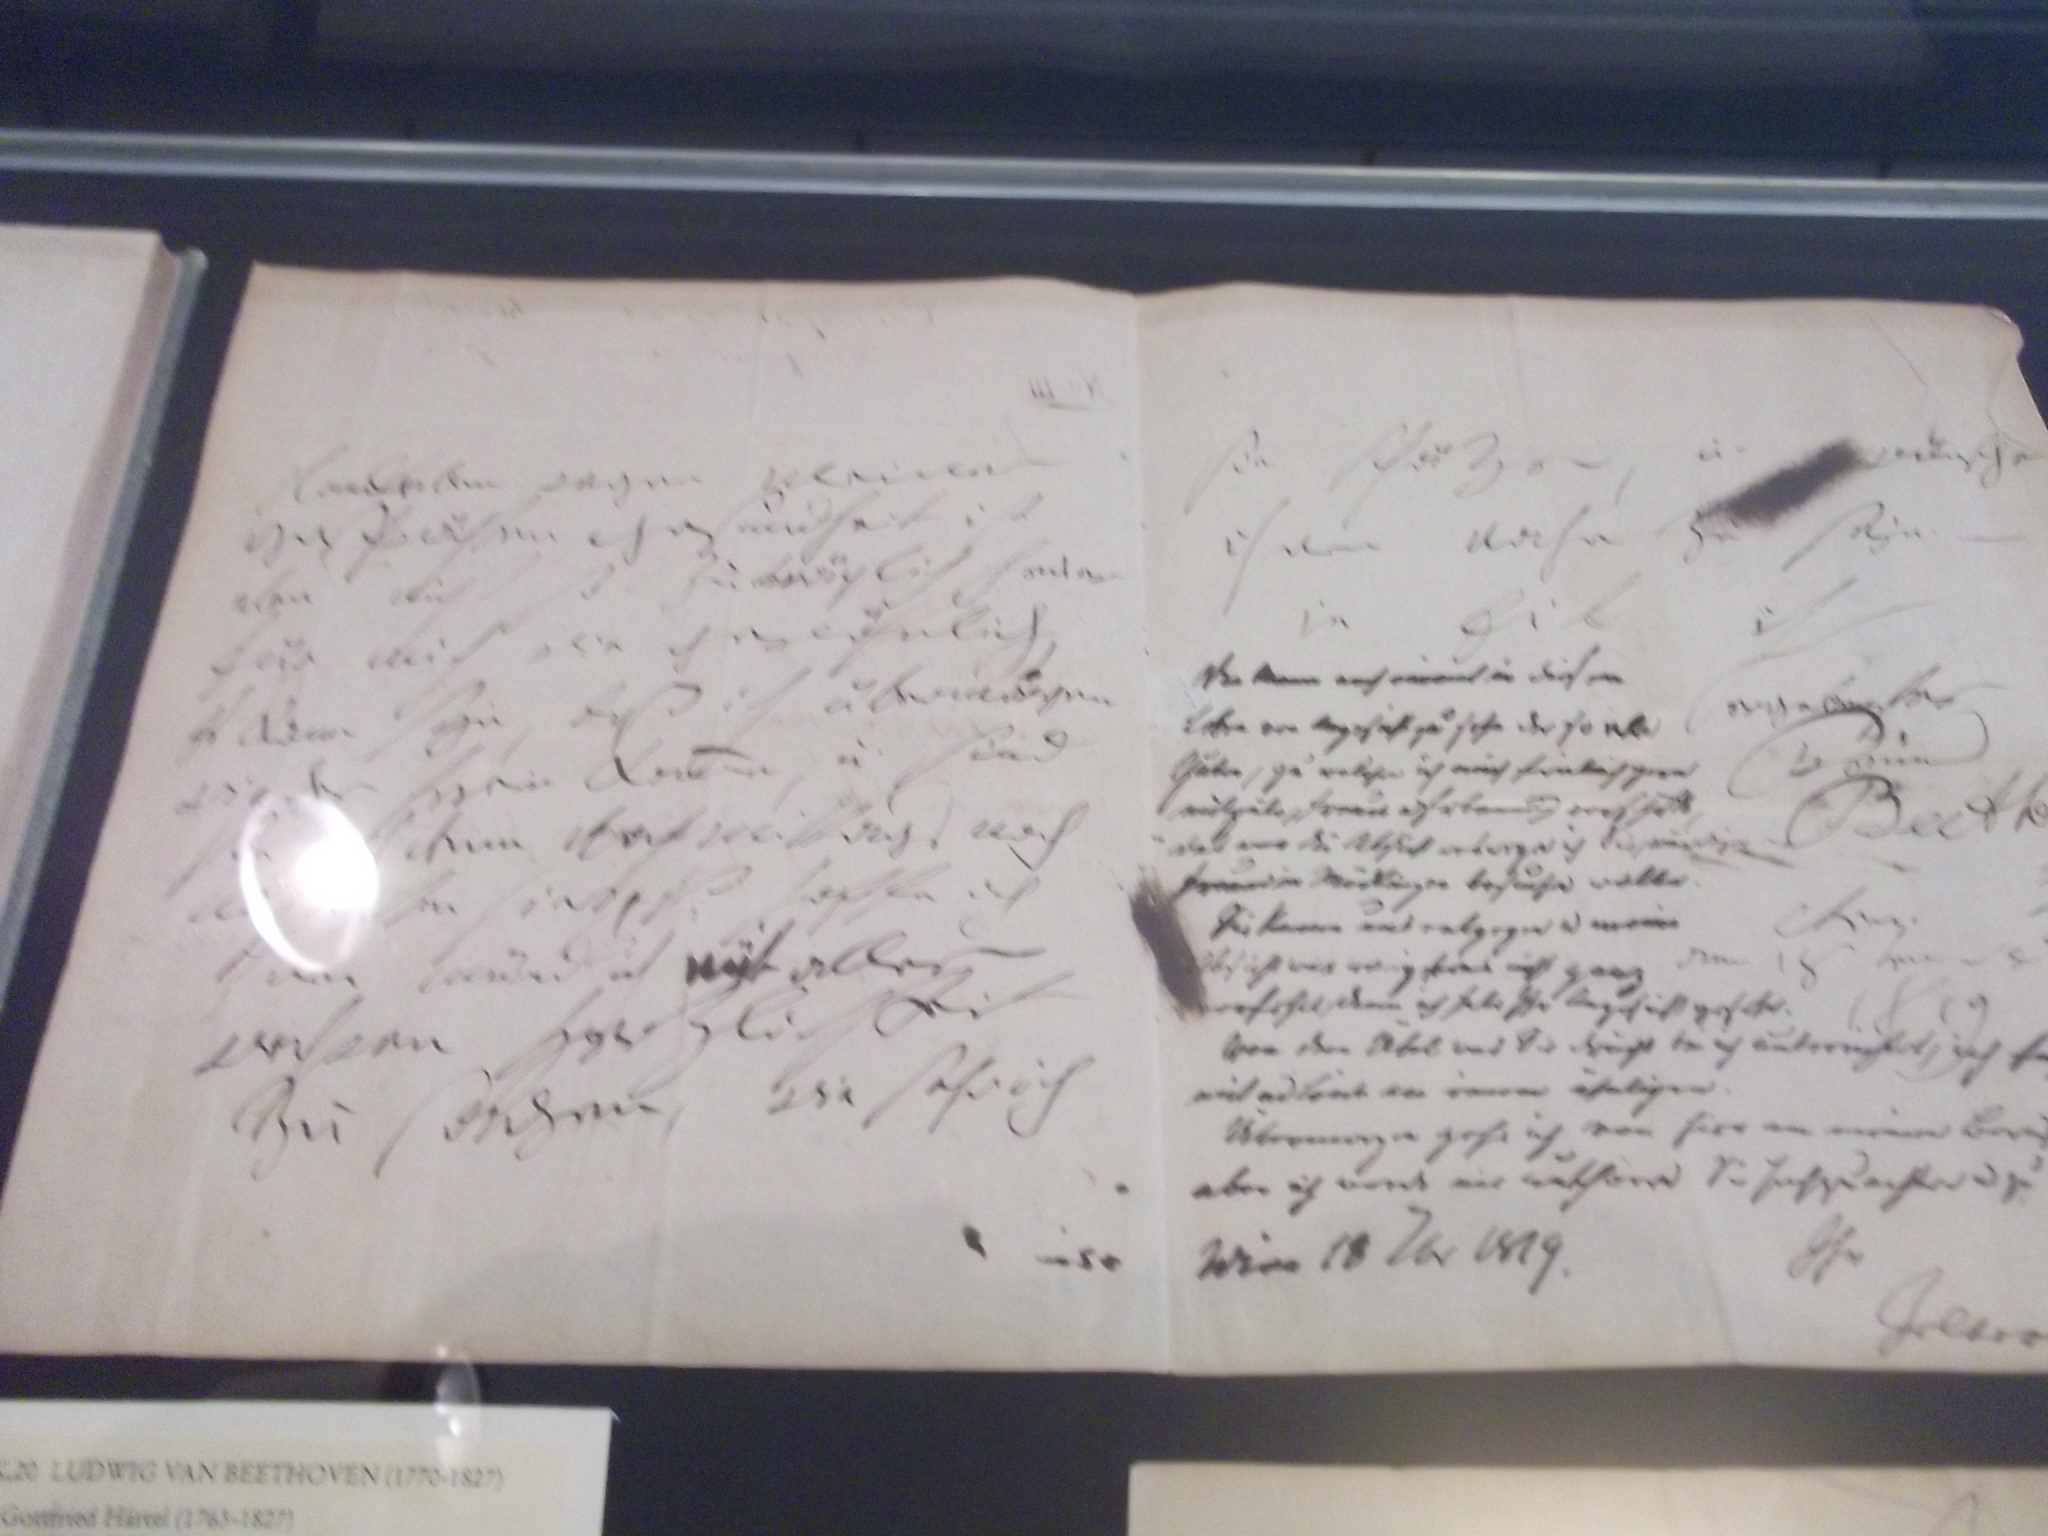 Brief des Komponisten Ludwig van Beethoven in dem er über seine Begegnung mit Goethe berichtet